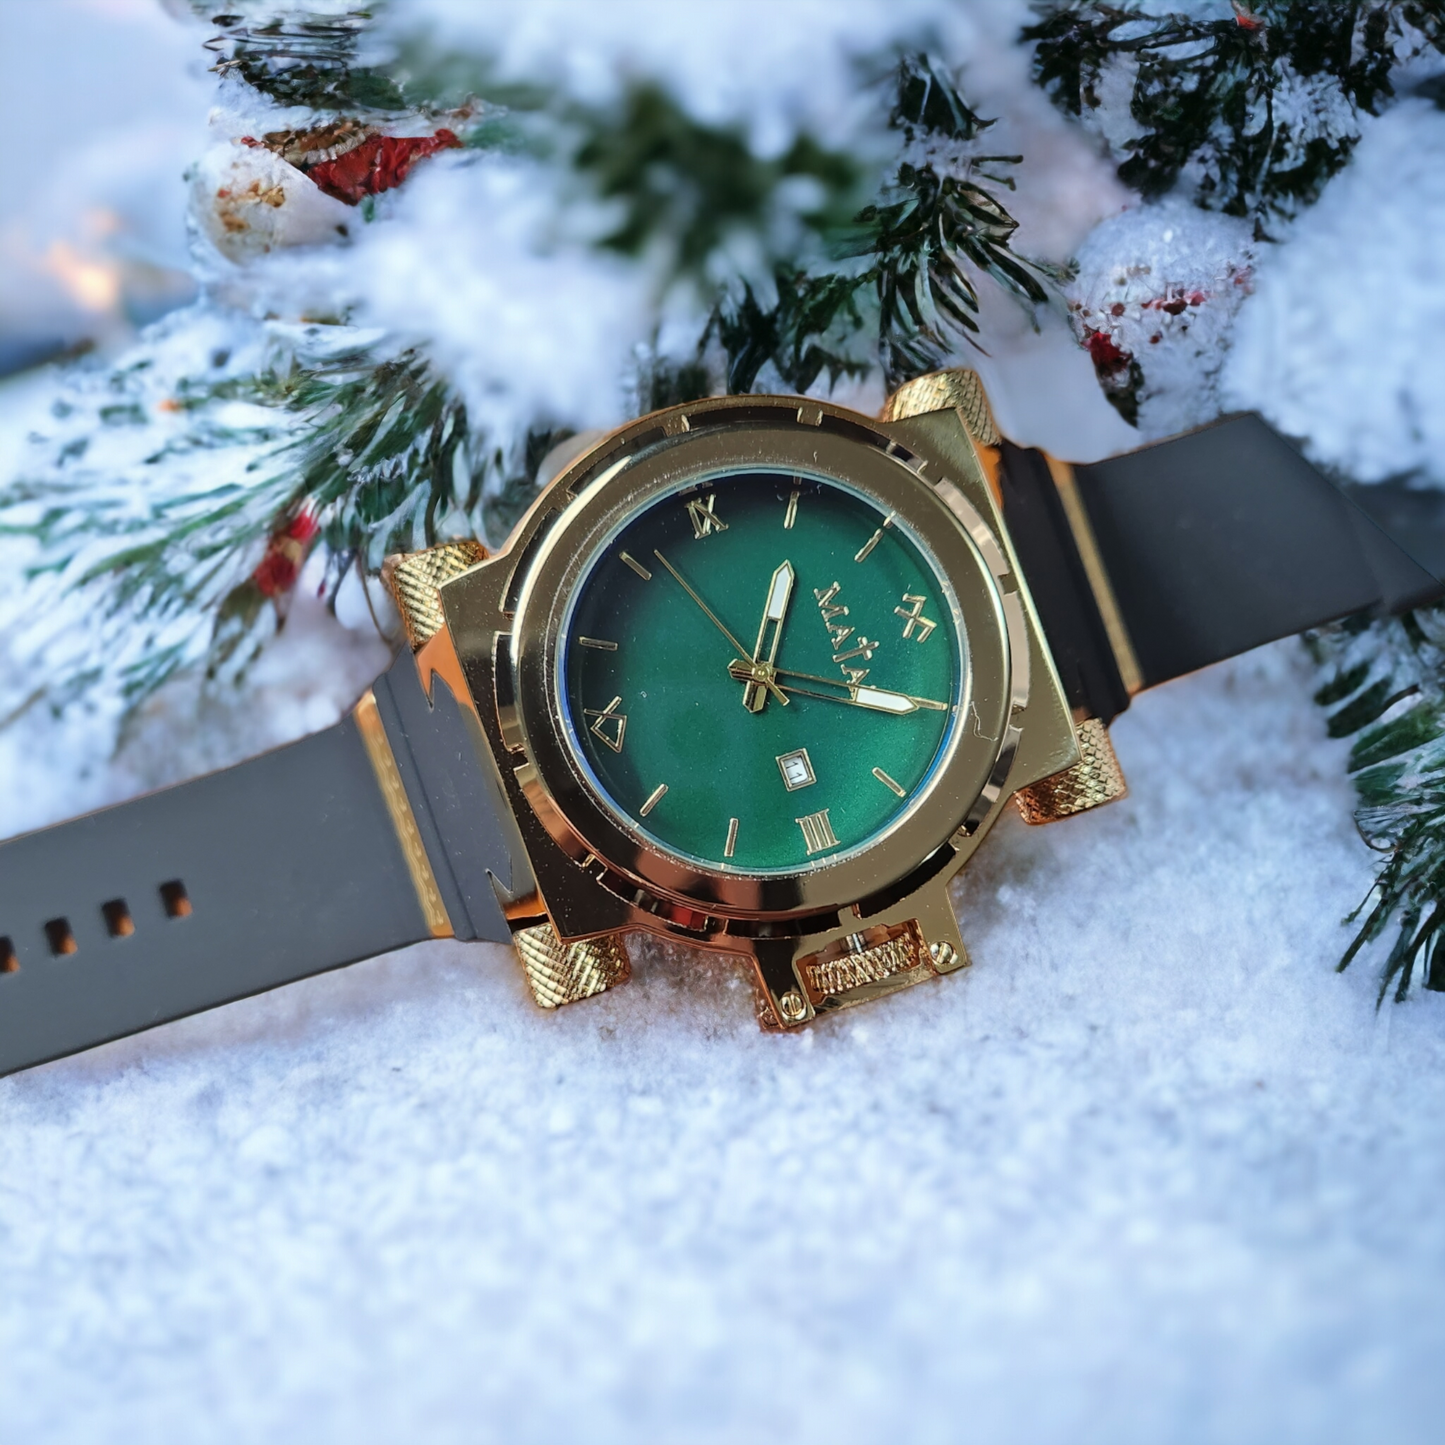 Matai - Gold / Green Genesis G3 Watch